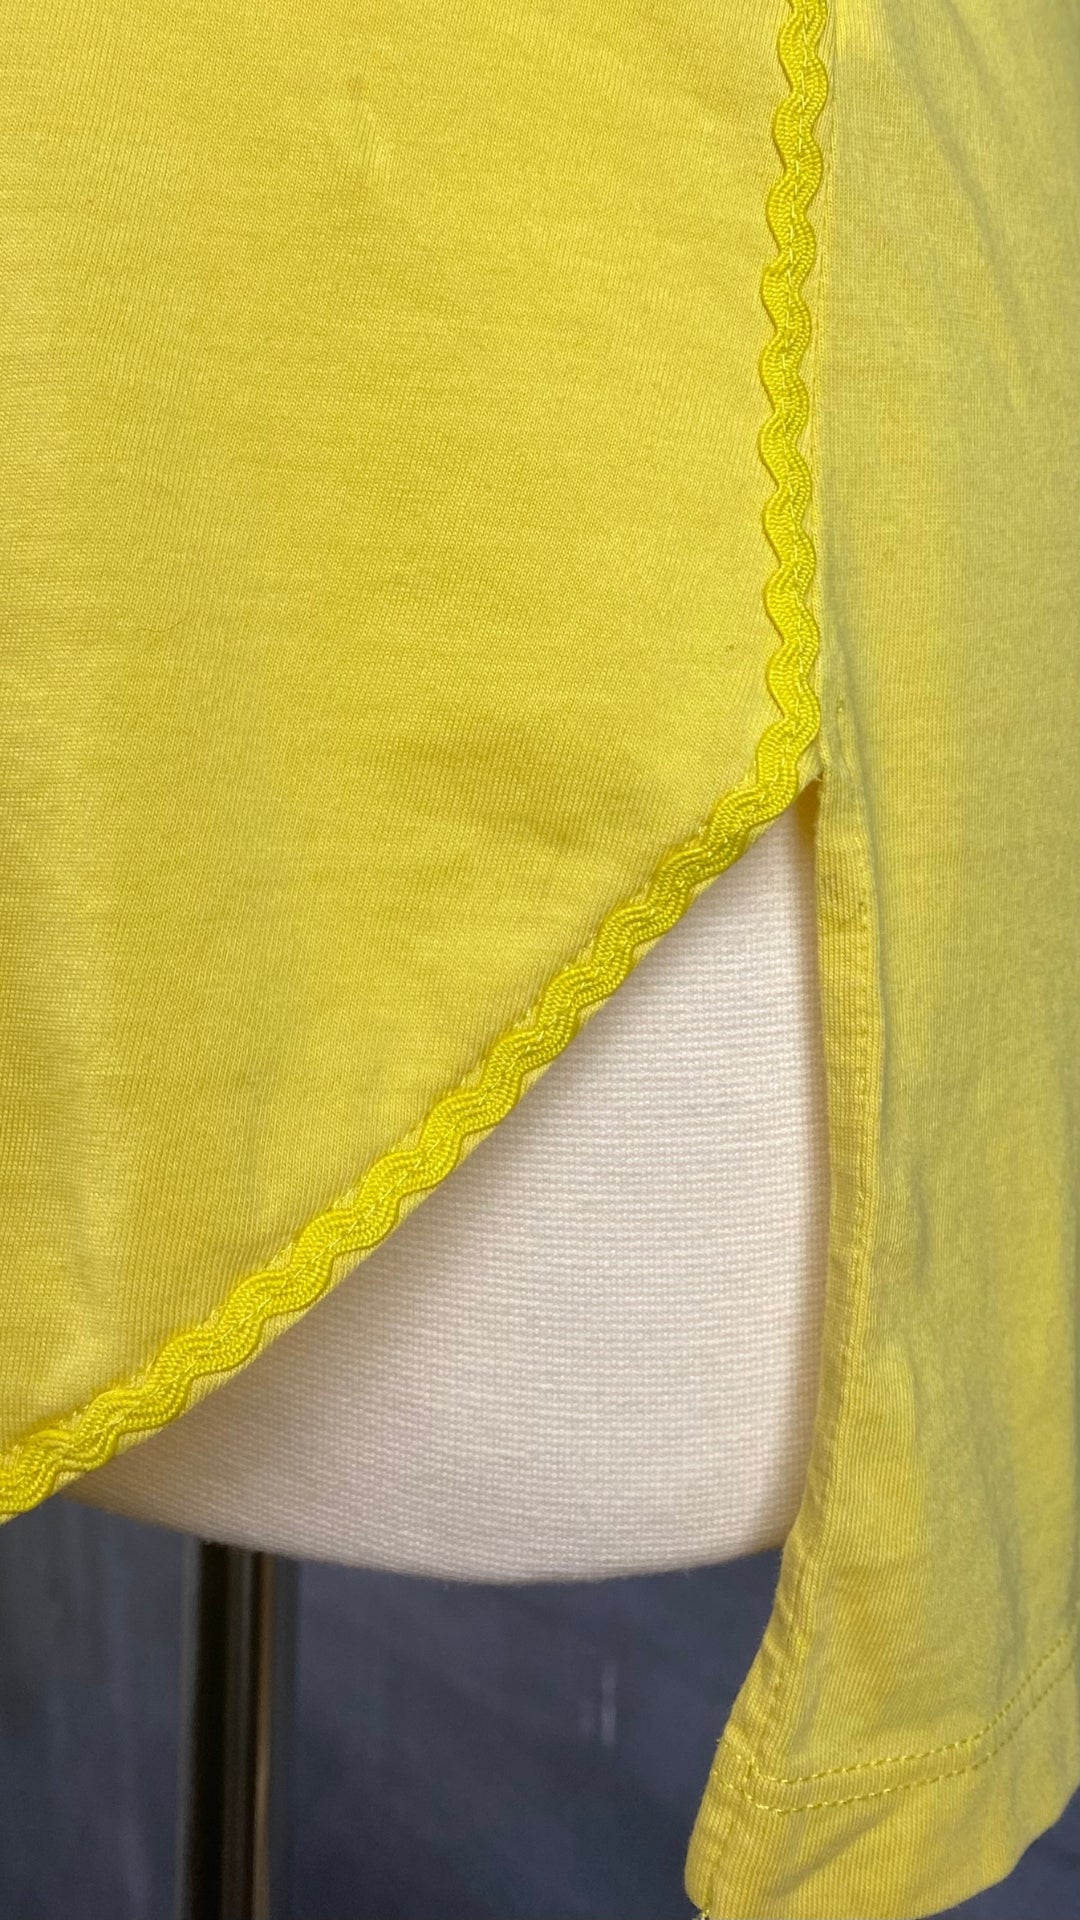 Camisole jaune en coton pima Tristan, taille small. Vue de la fente.